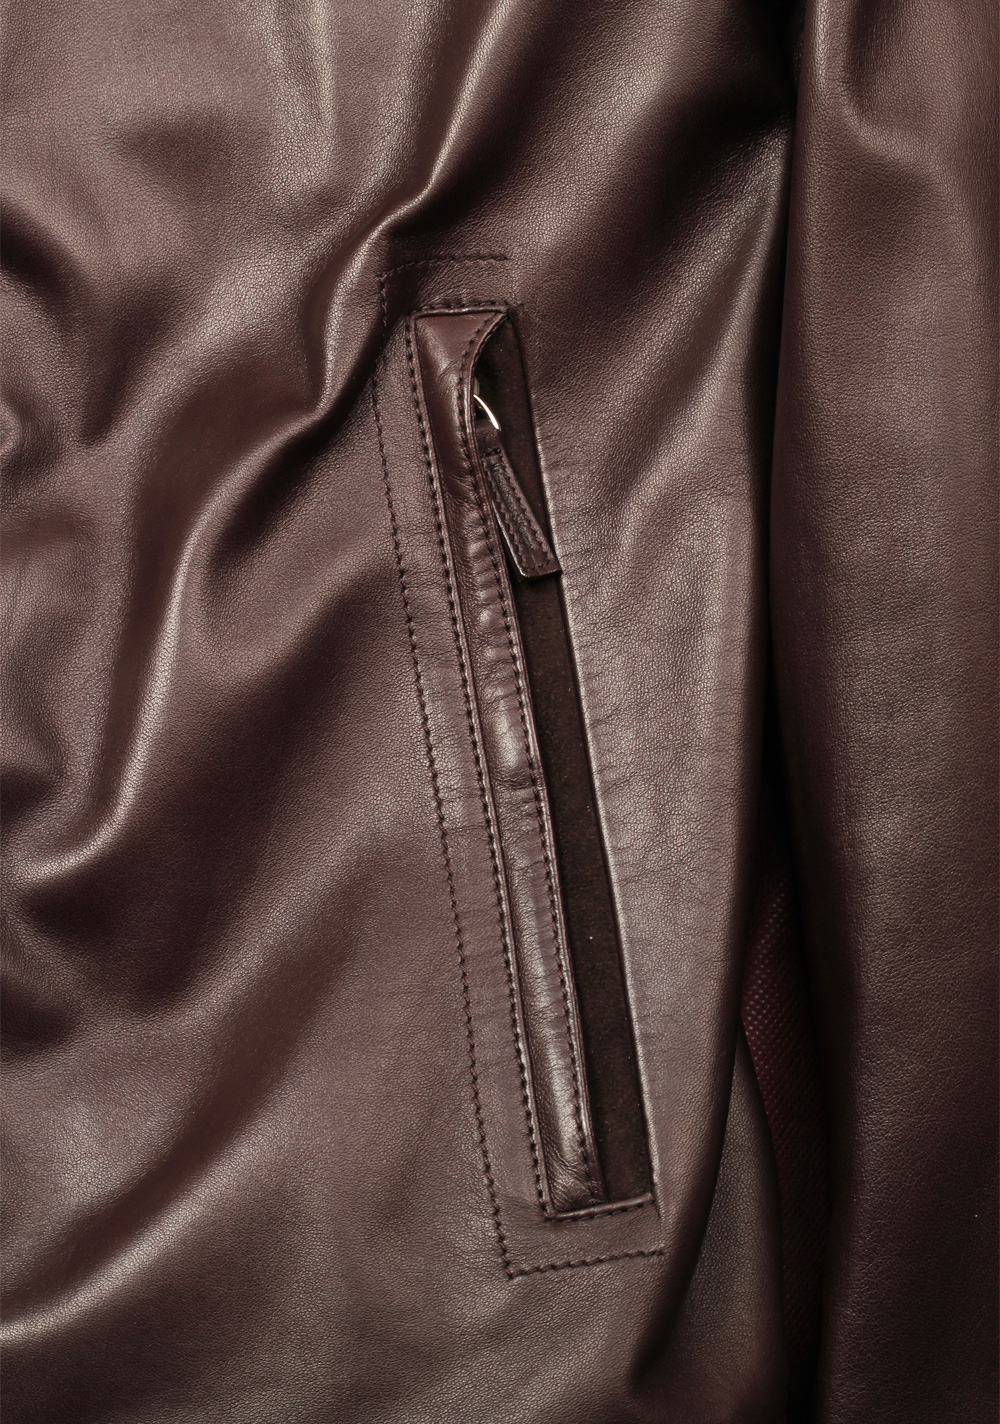 Massimo Sforza Brown Leather Coat Jacket Size 56 / 46R U.S. | Costume Limité